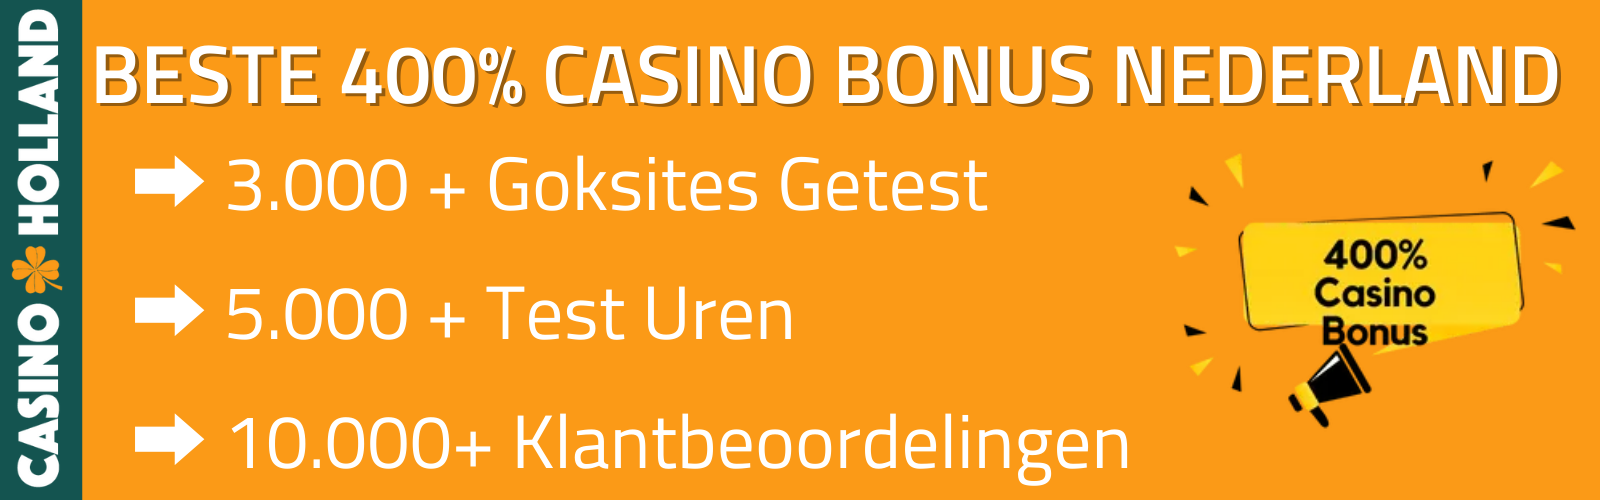 400% Casino bonus Nederland